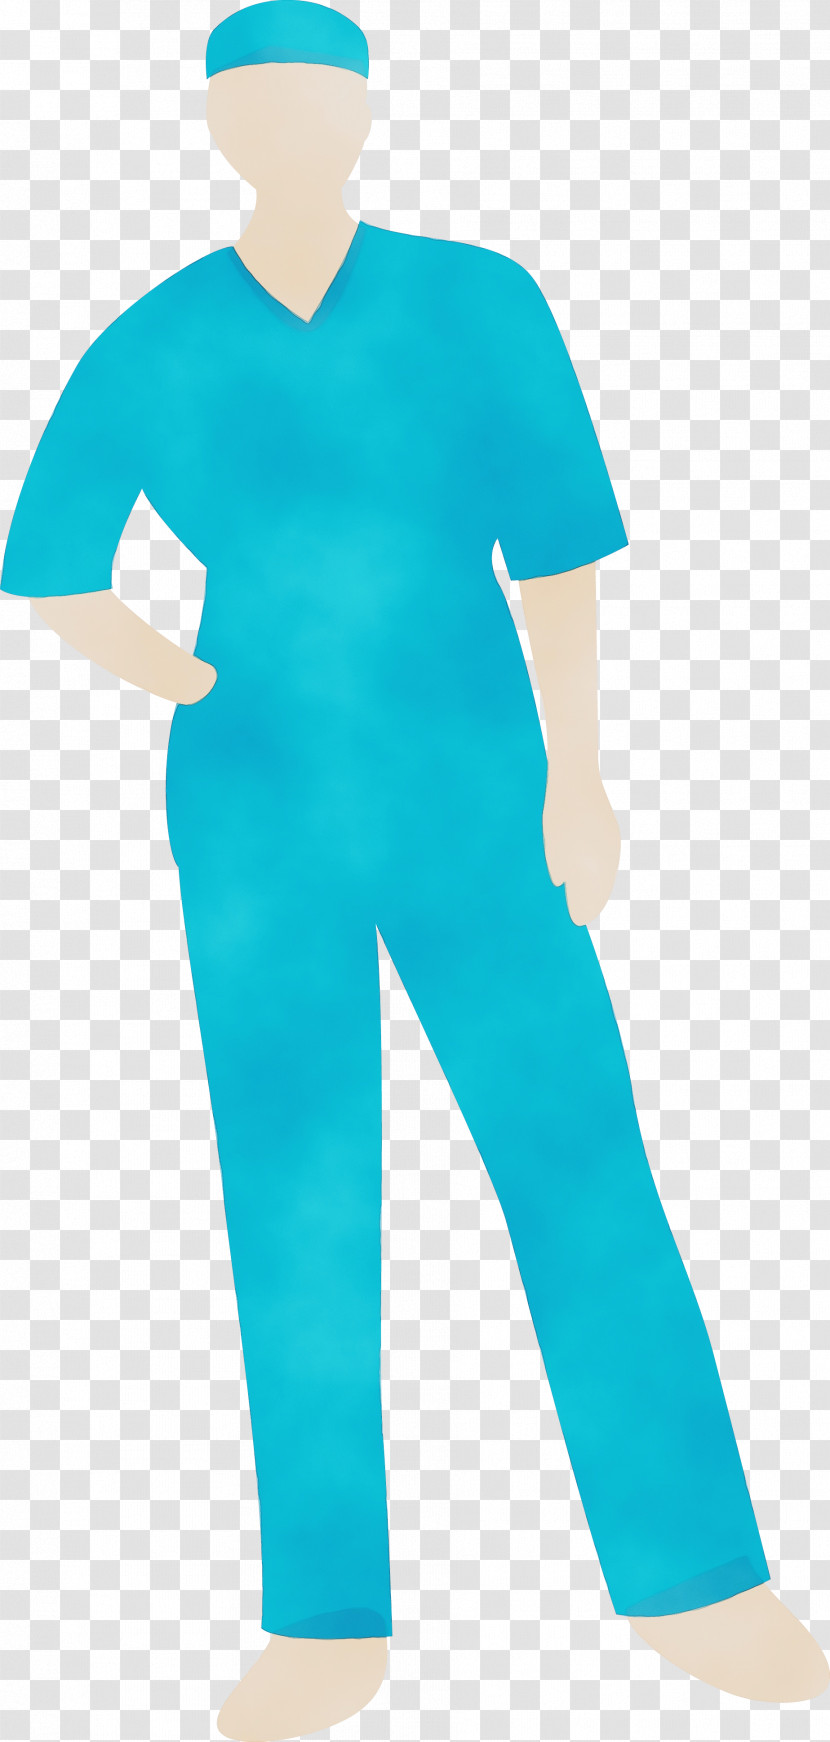 Sleeve Medical Glove Uniform Glove Turquoise Transparent PNG